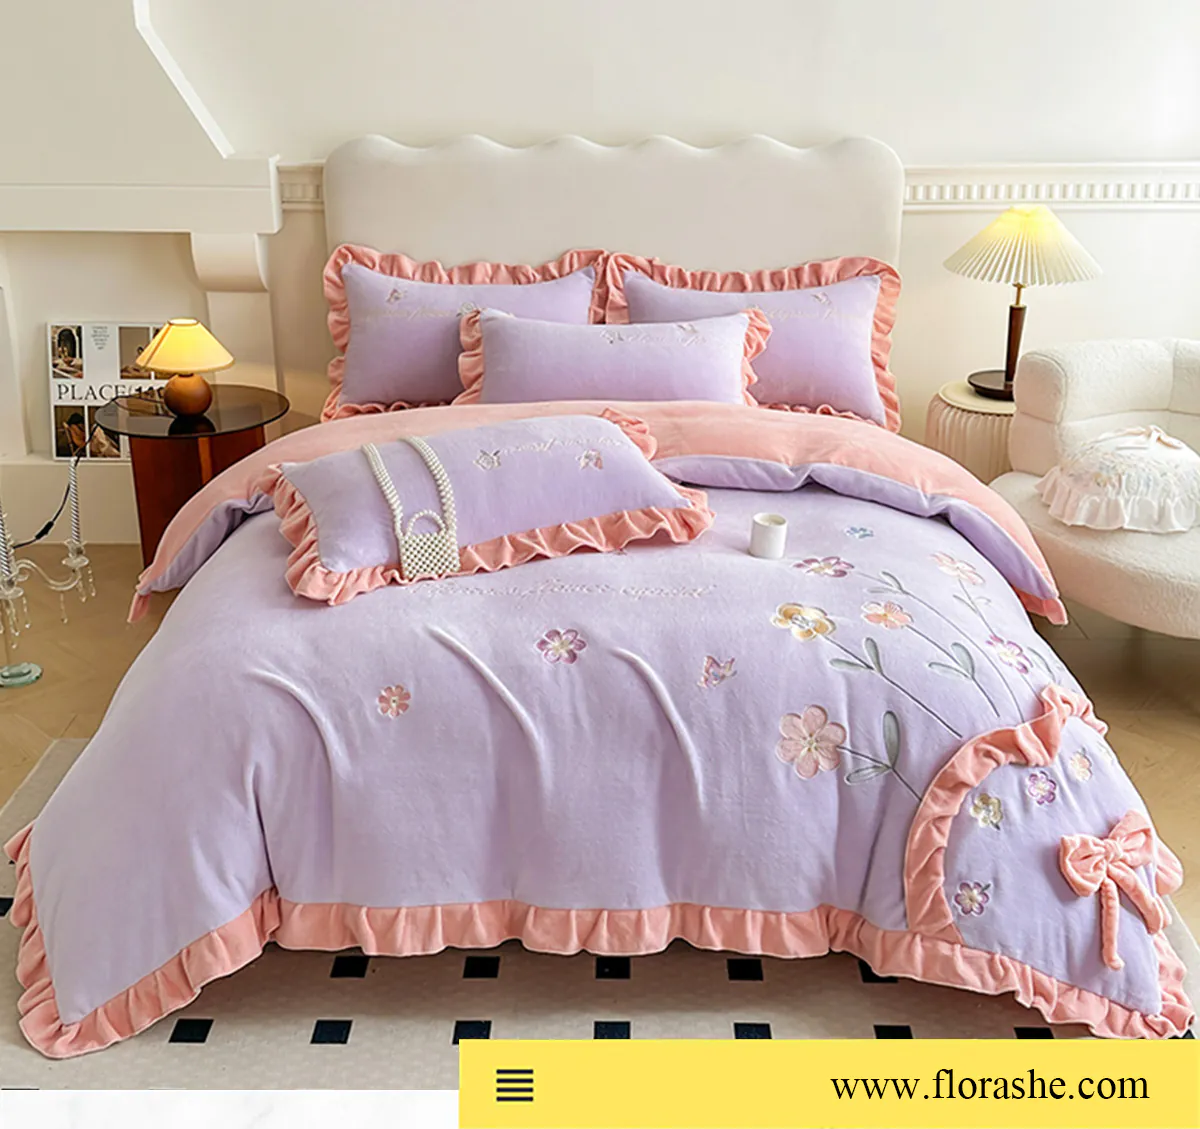 Romantic-Milk-Fiber-Comforter-Cover-Bed-Sheet-Pillowcases-4-Pcs-Set20